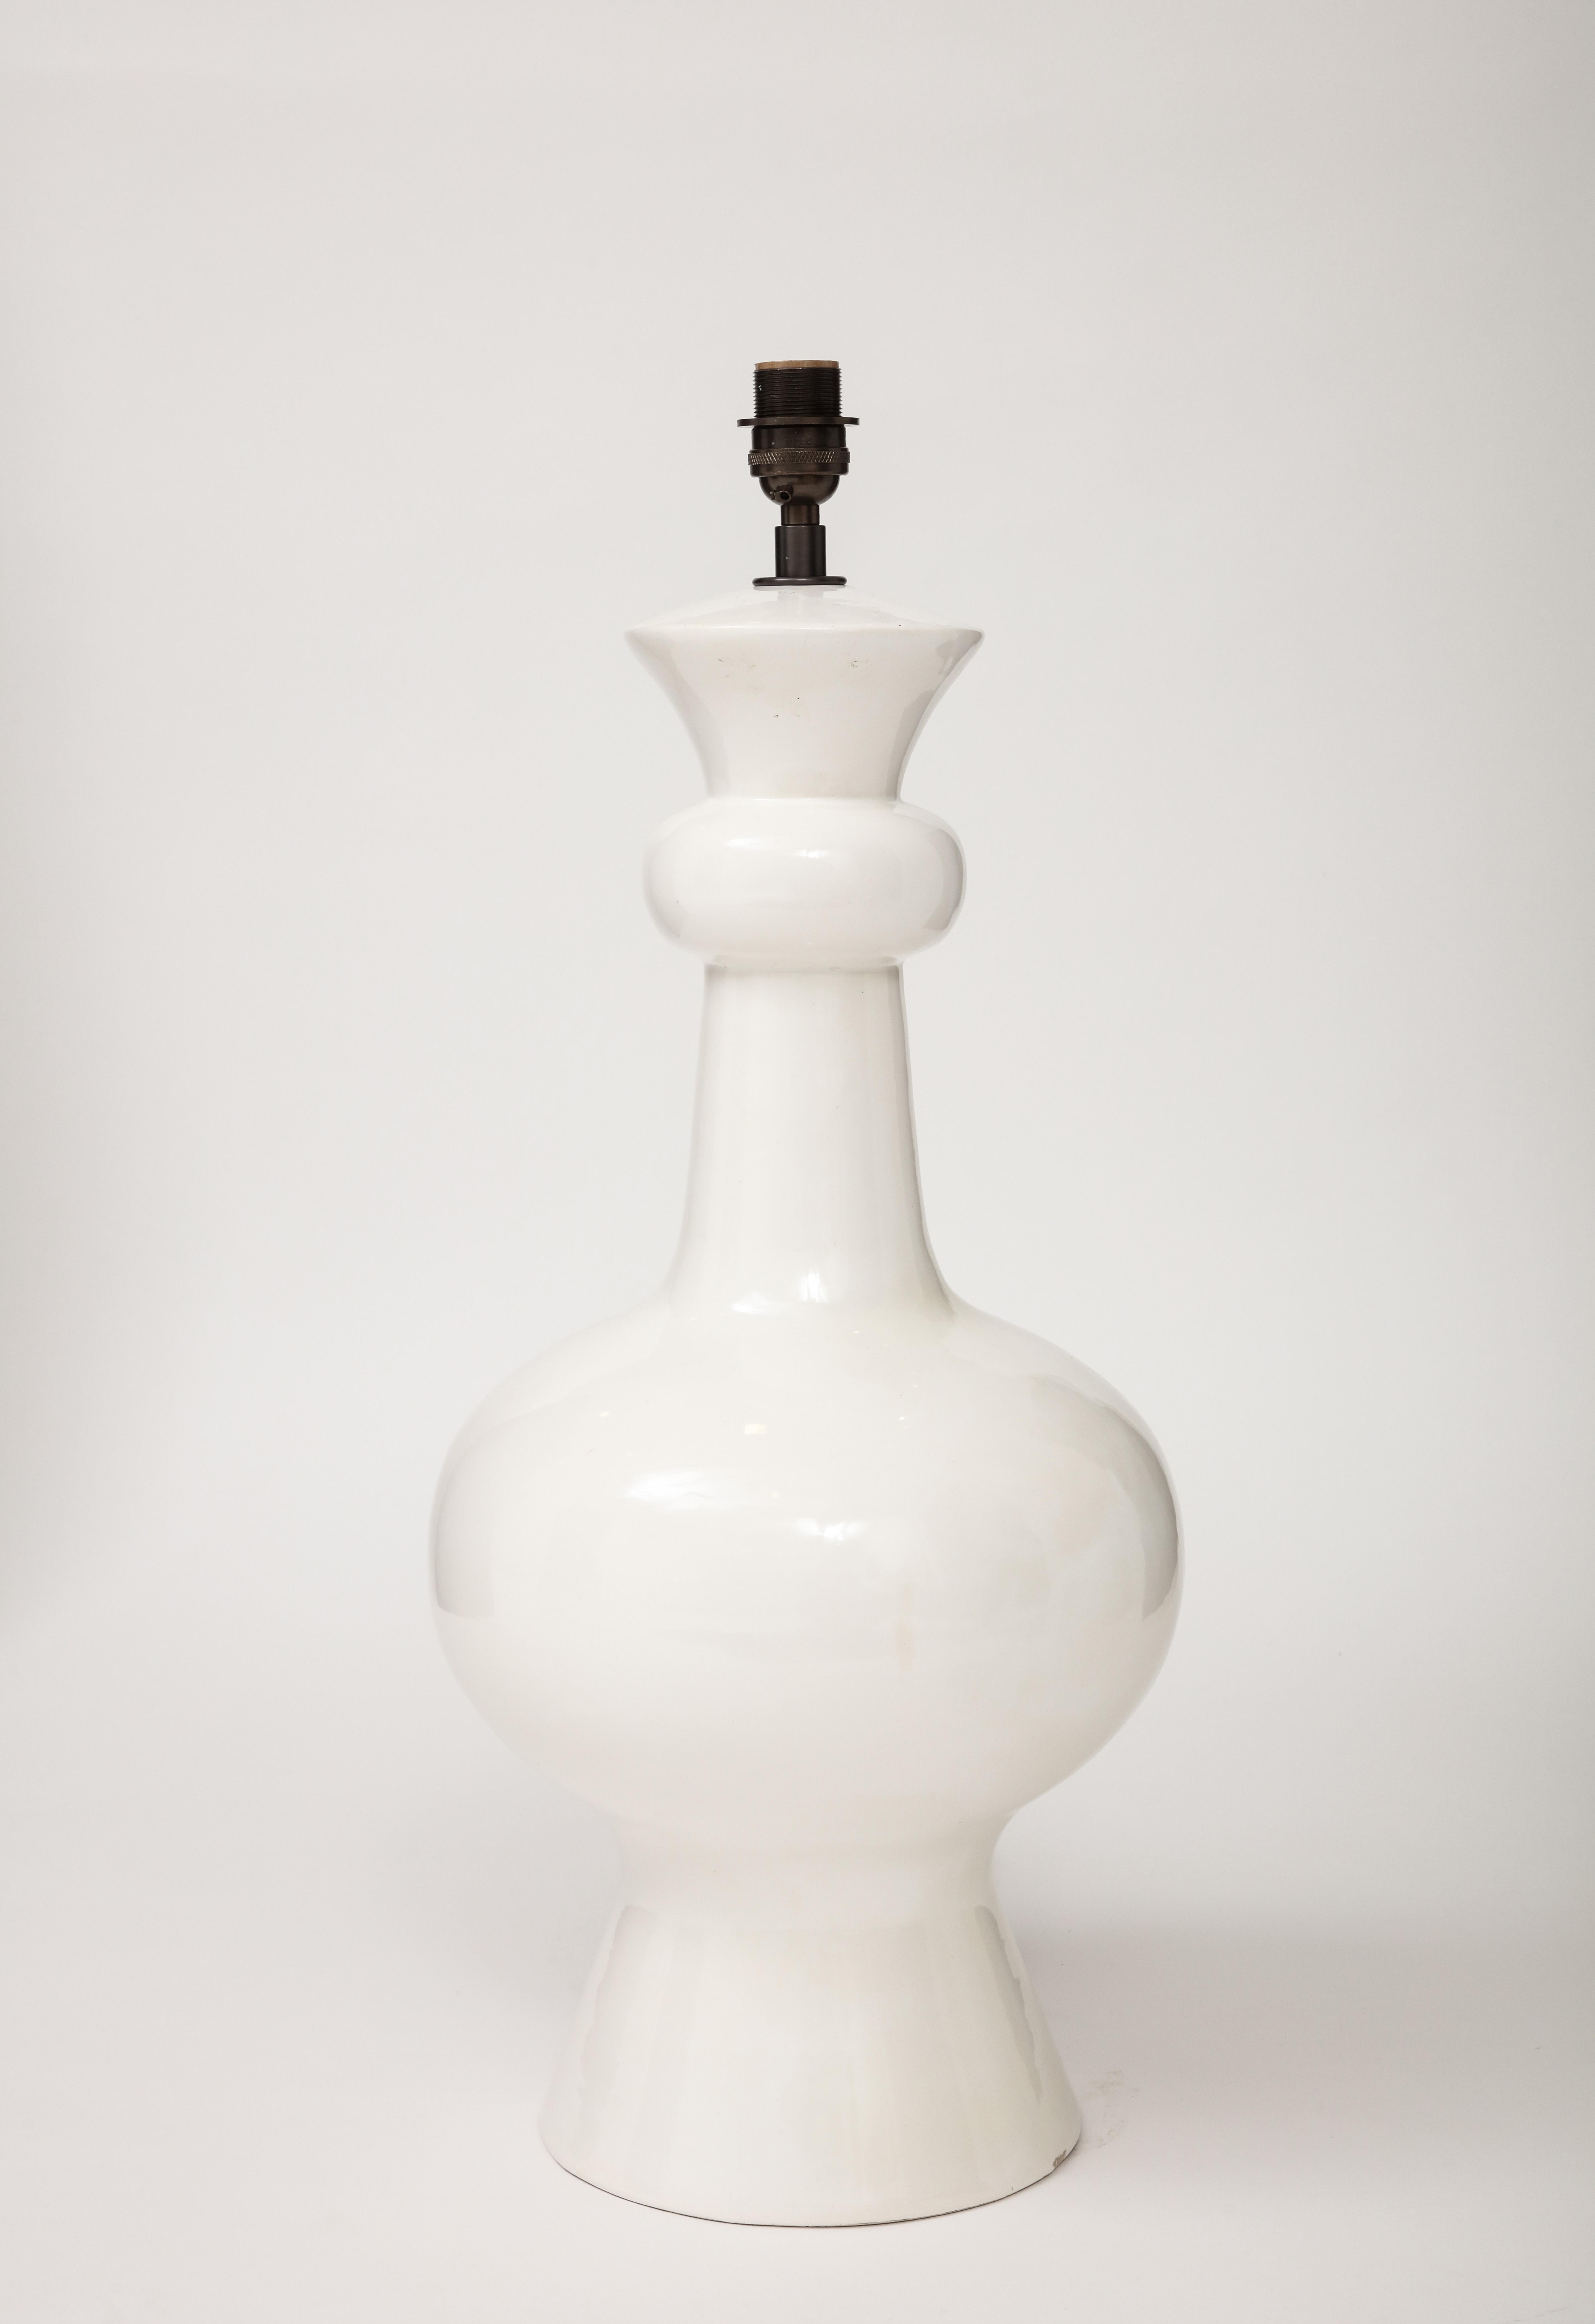 Large Scale Italian White Ceramic Lamp, 1960's For Sale 1